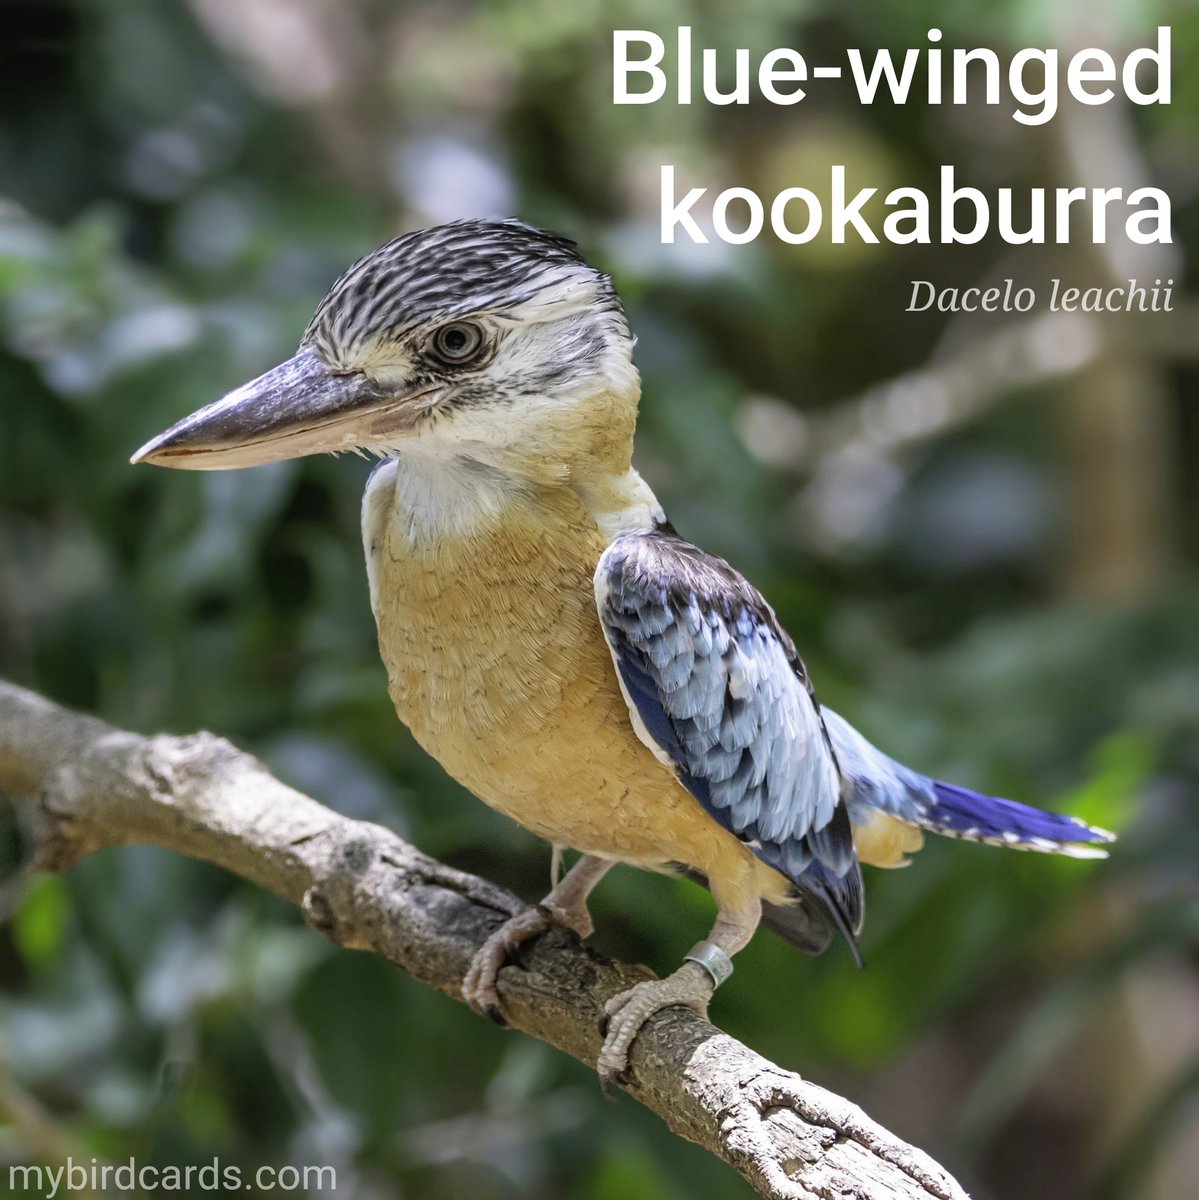 🌏 Blue-winged kookaburra (Dacelo leachii) #Australasianbirds #Australianbirds #NewGuineanbirds | #TreeKingfishers #Halcyoninae #Kingfishers #Alcedinidae #mybirdcards #birdcards #birds🦜 #BirdsOfTwitter #birds